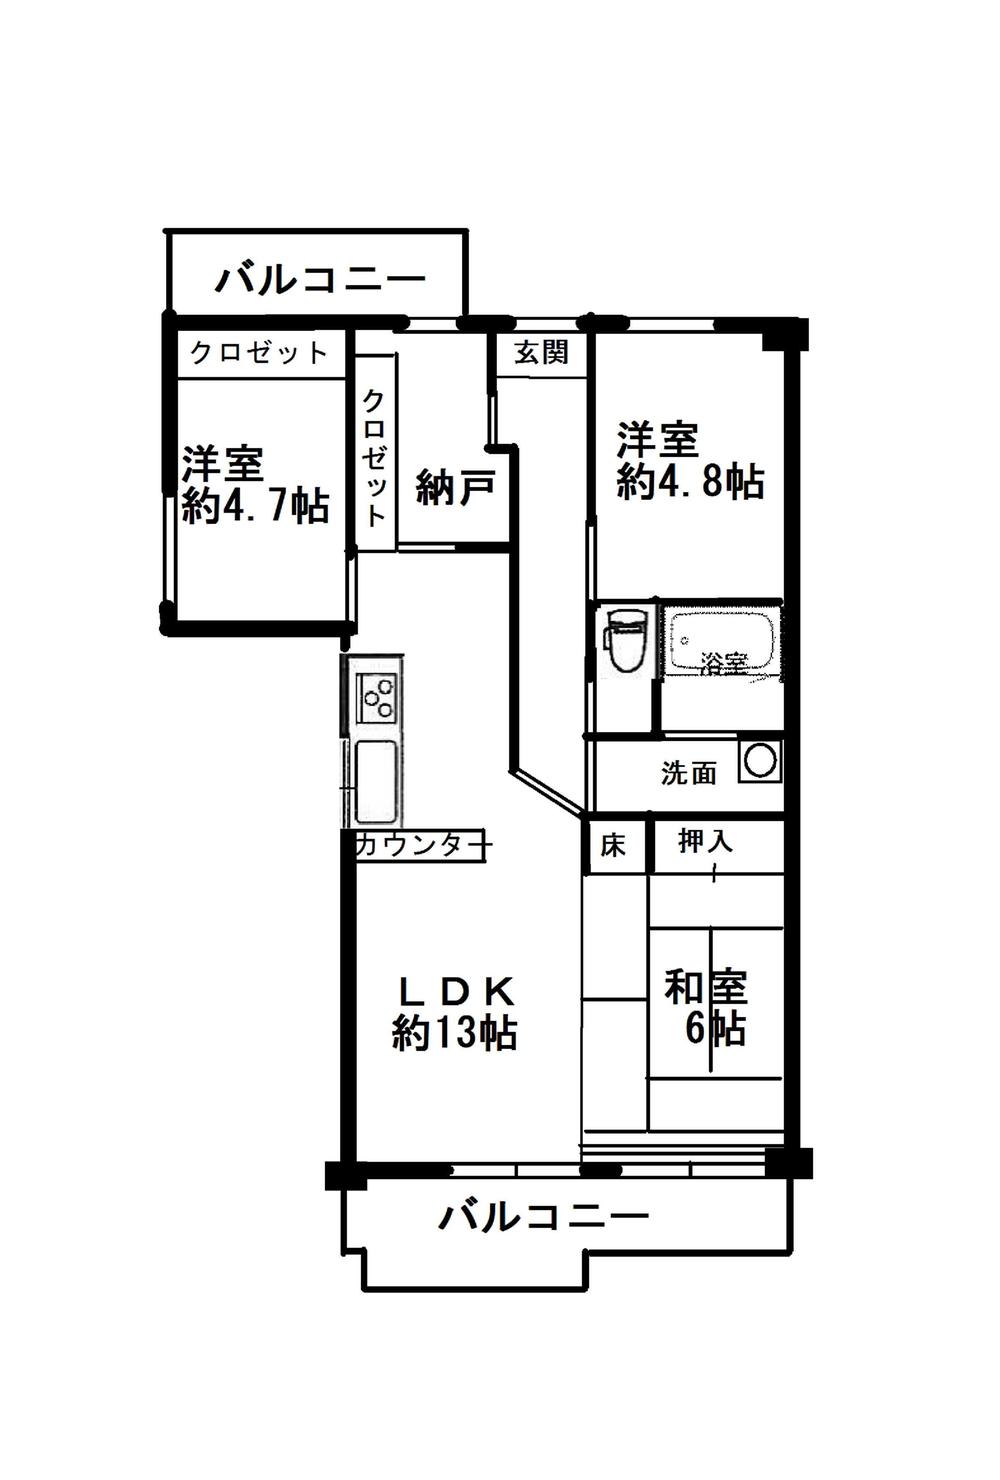 Floor plan. 3LDK + S (storeroom), Price 14.3 million yen, Occupied area 76.07 sq m , Balcony area 13.72 sq m